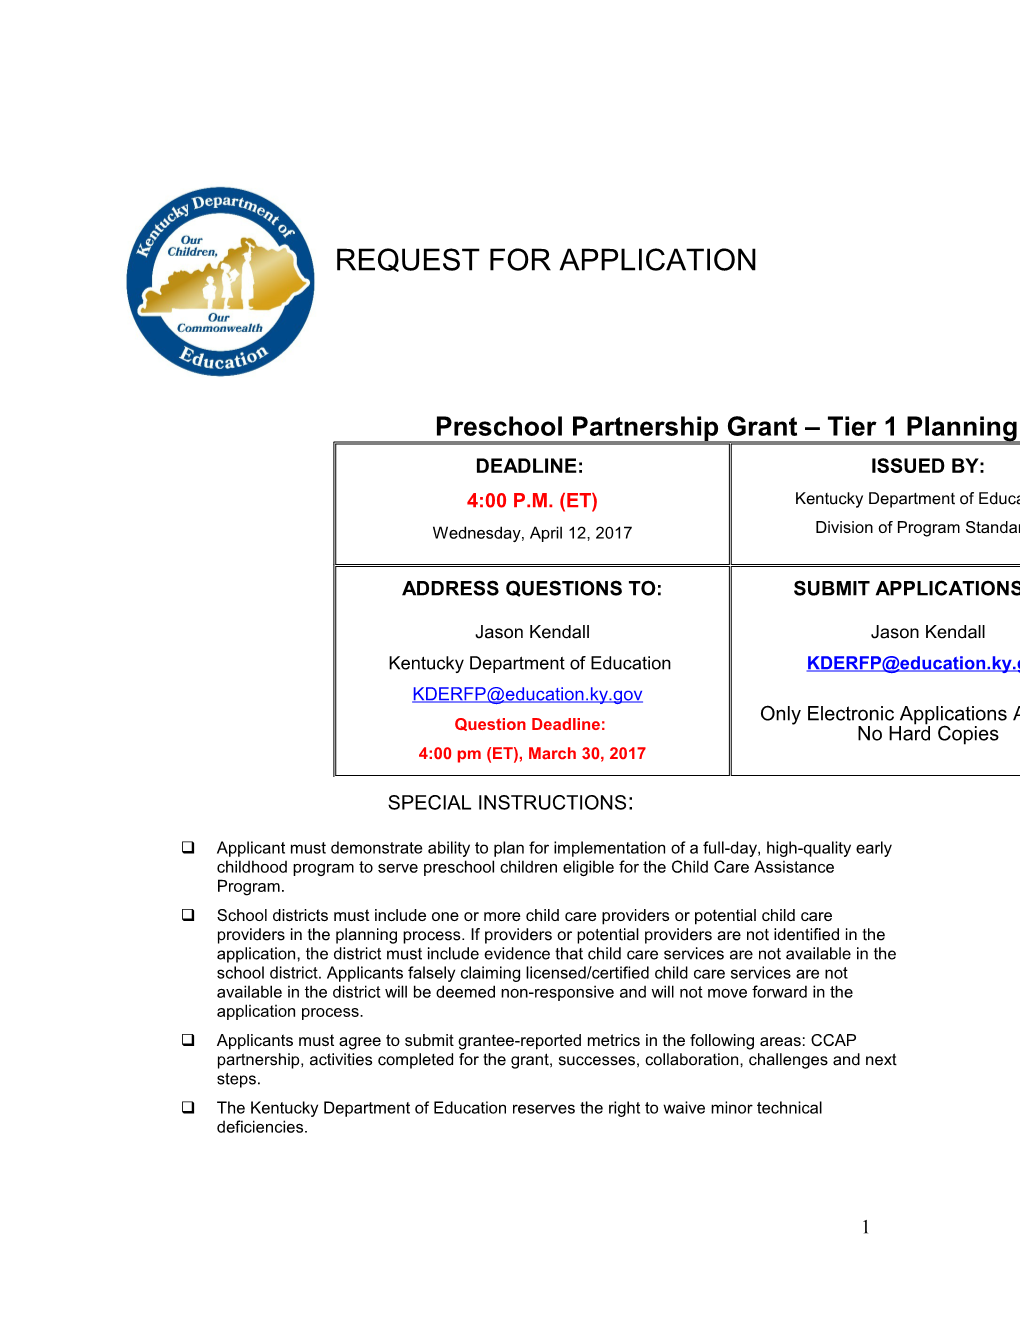 Preschool Partnership Grant Tier 1 Planning Request for Application